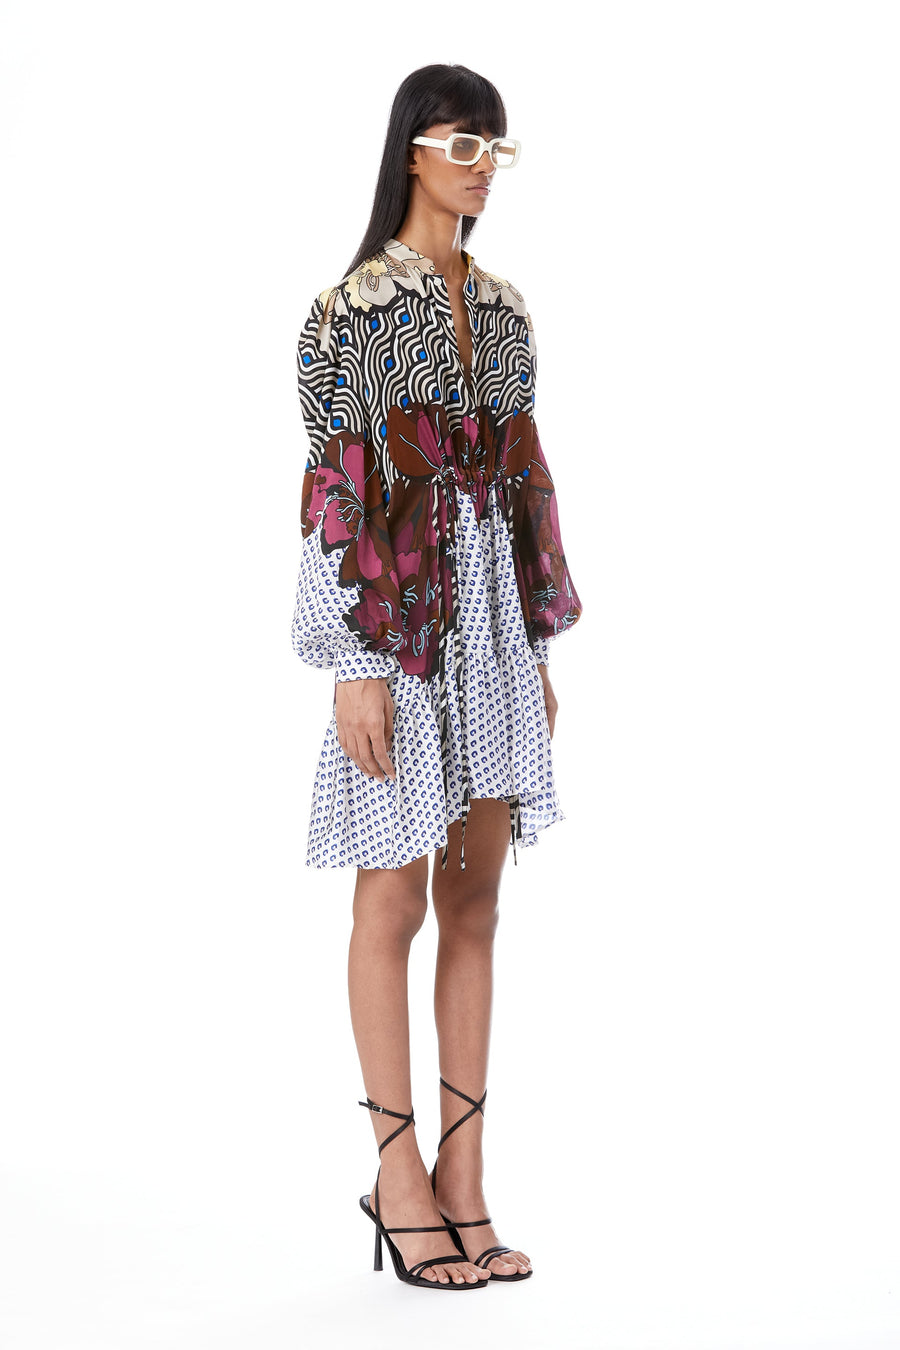 'Peonies Retro' Print Dress - Kanika Goyal Label